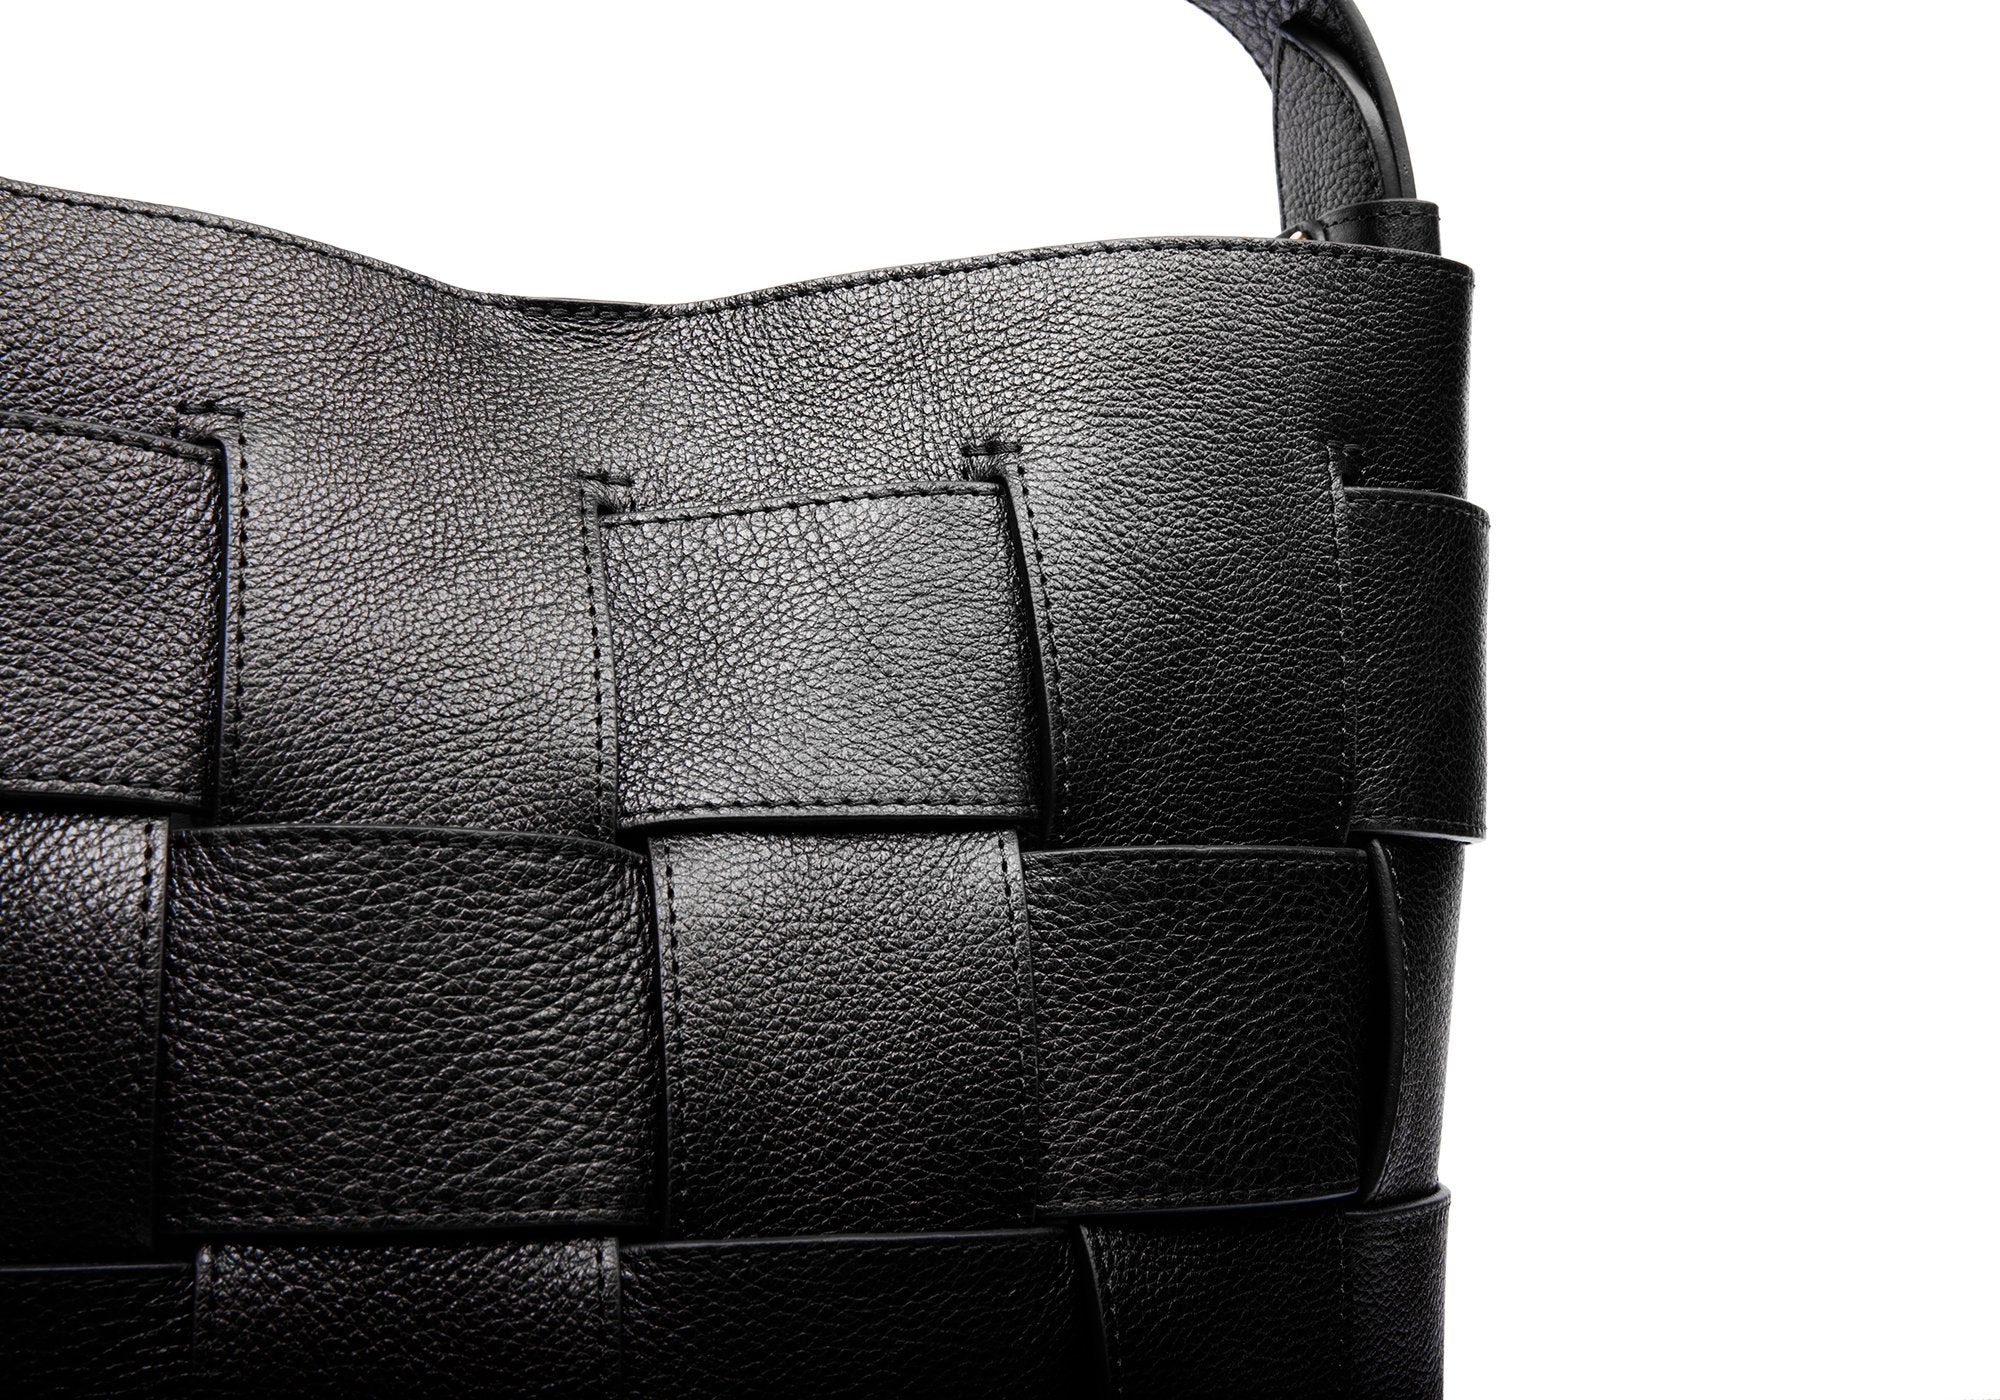 Women's Grey Leather Classic Bucket Handbag Large Size